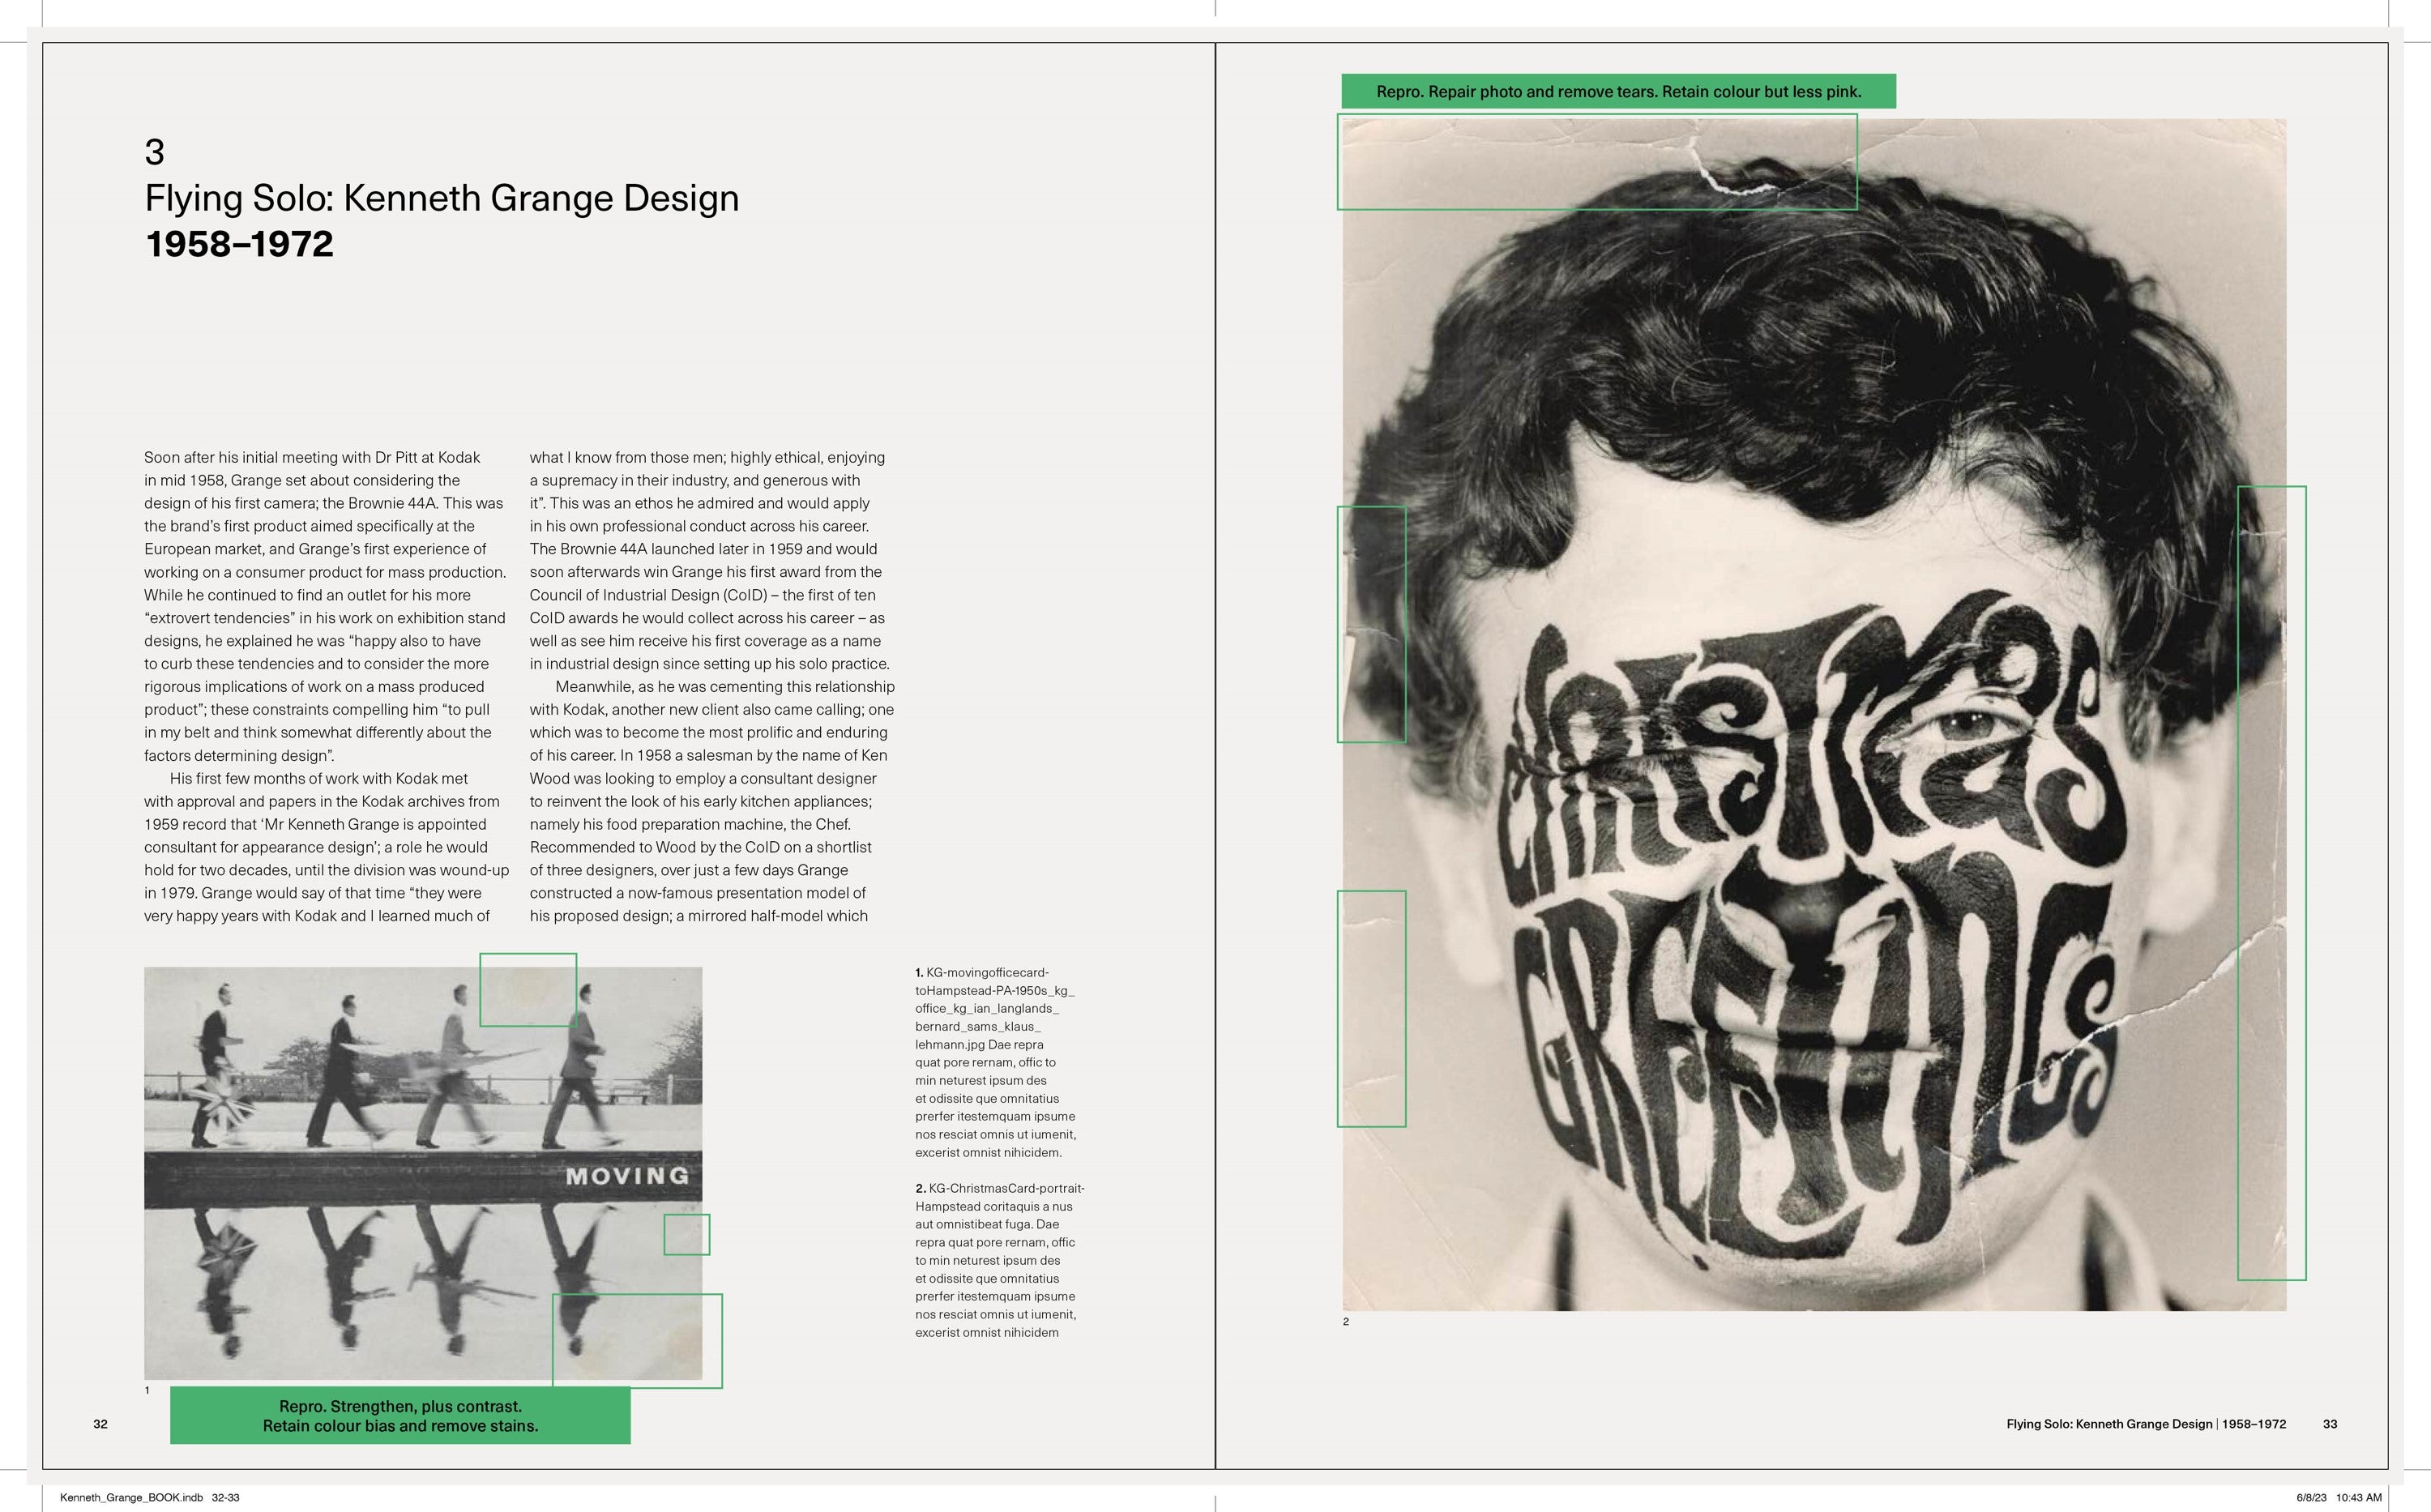 Kenneth Grange. Designing the Modern World